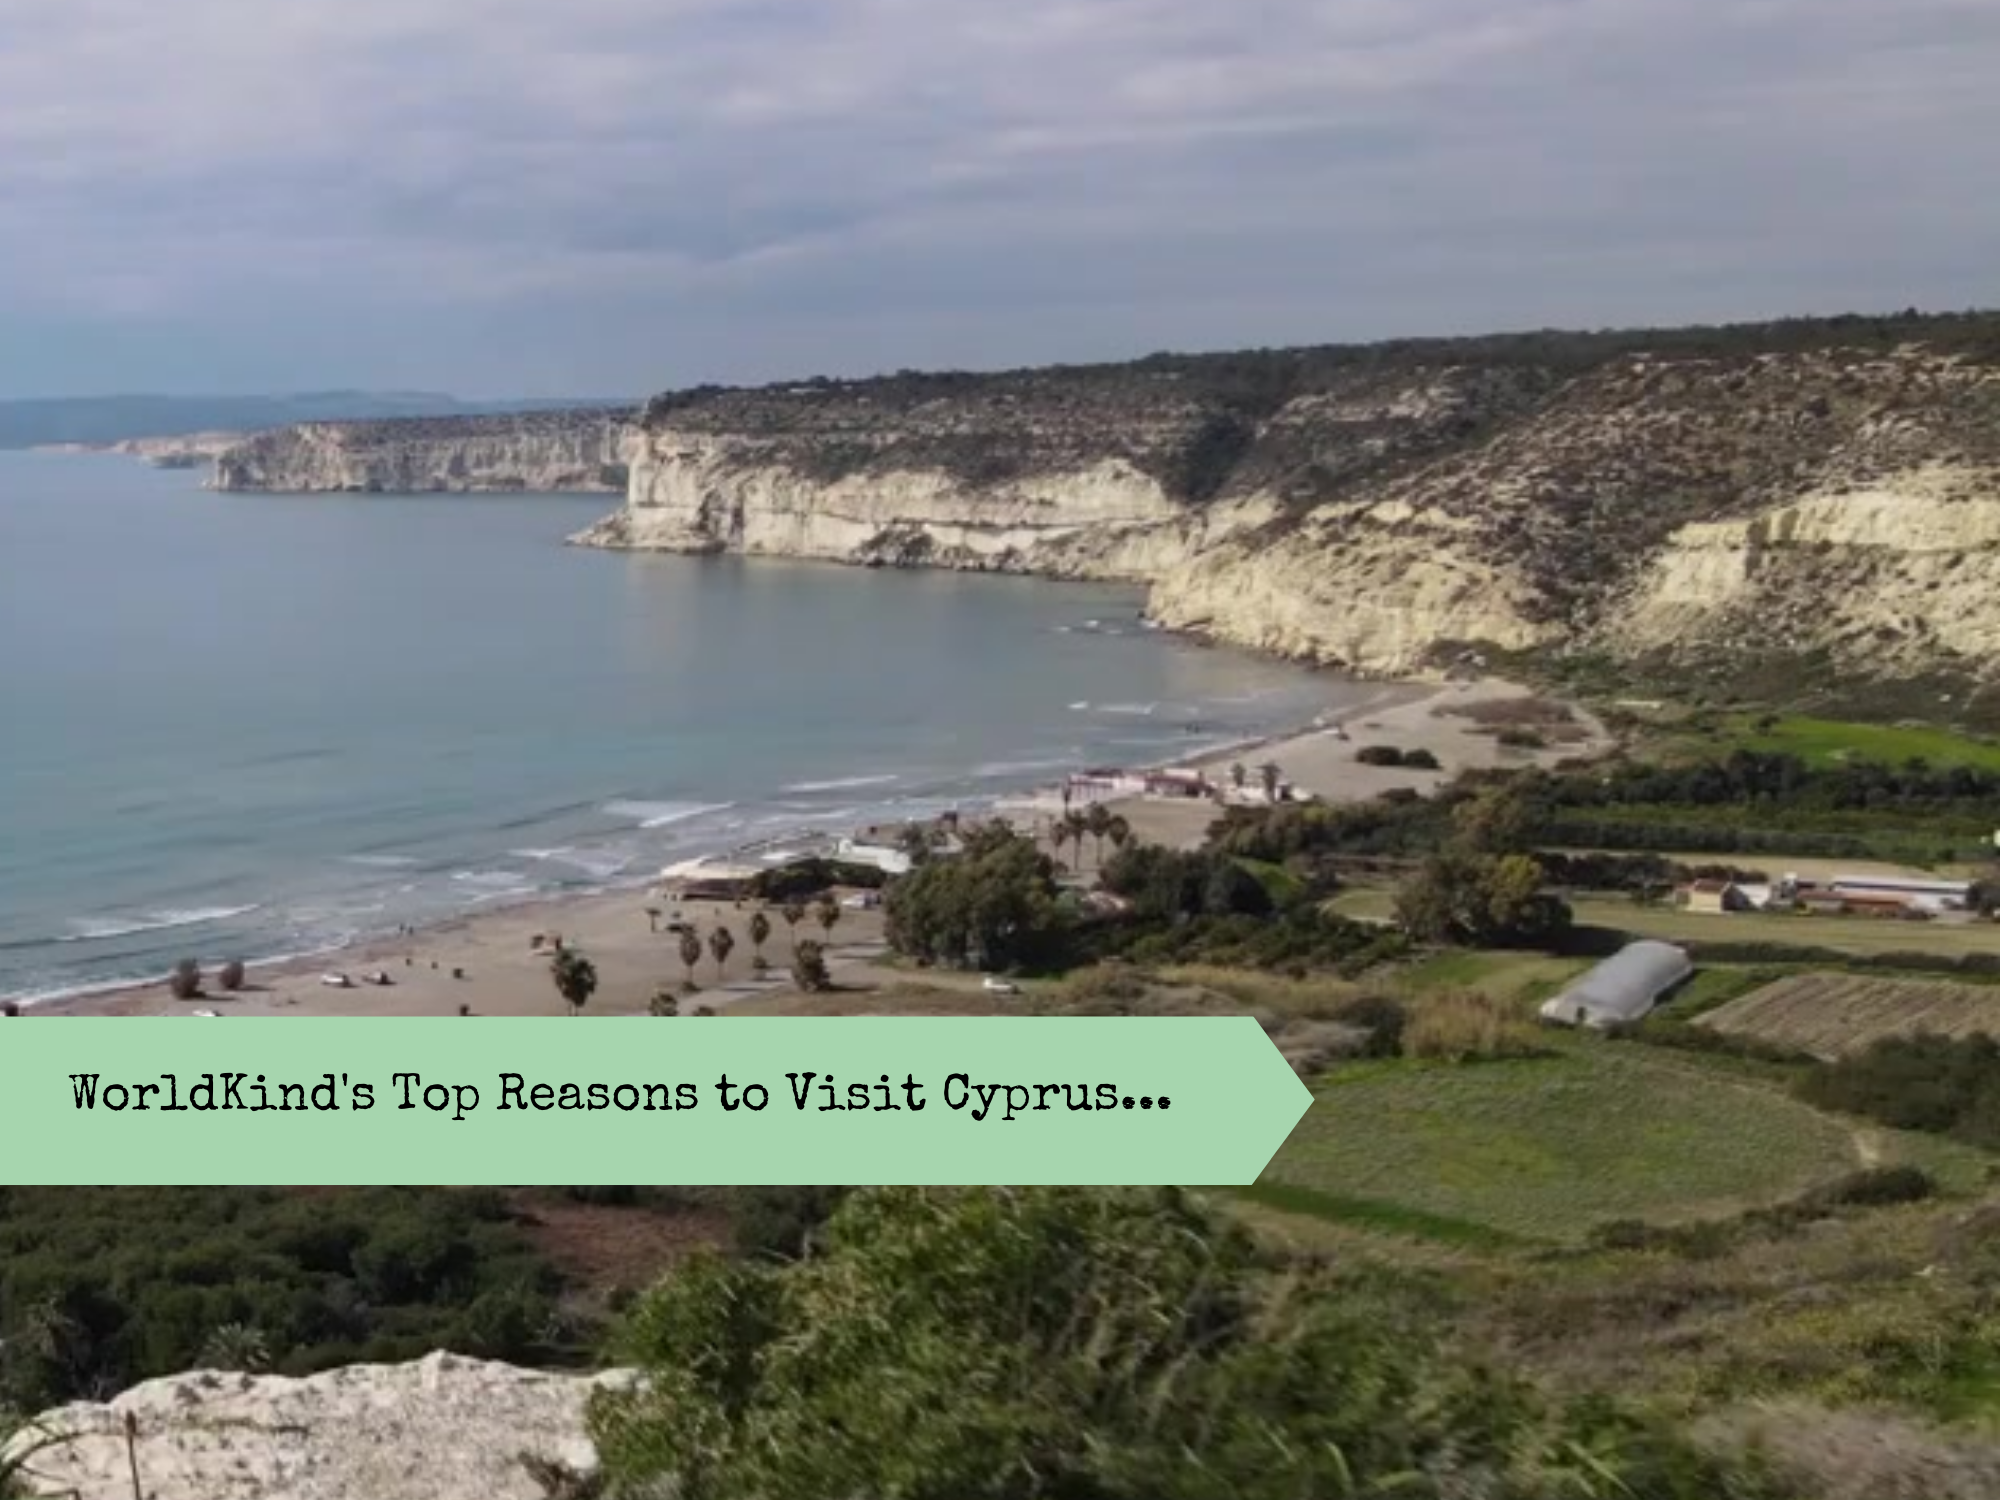 Cyprus promo video: WorldKind's Top Reasons to Visit Cyprus